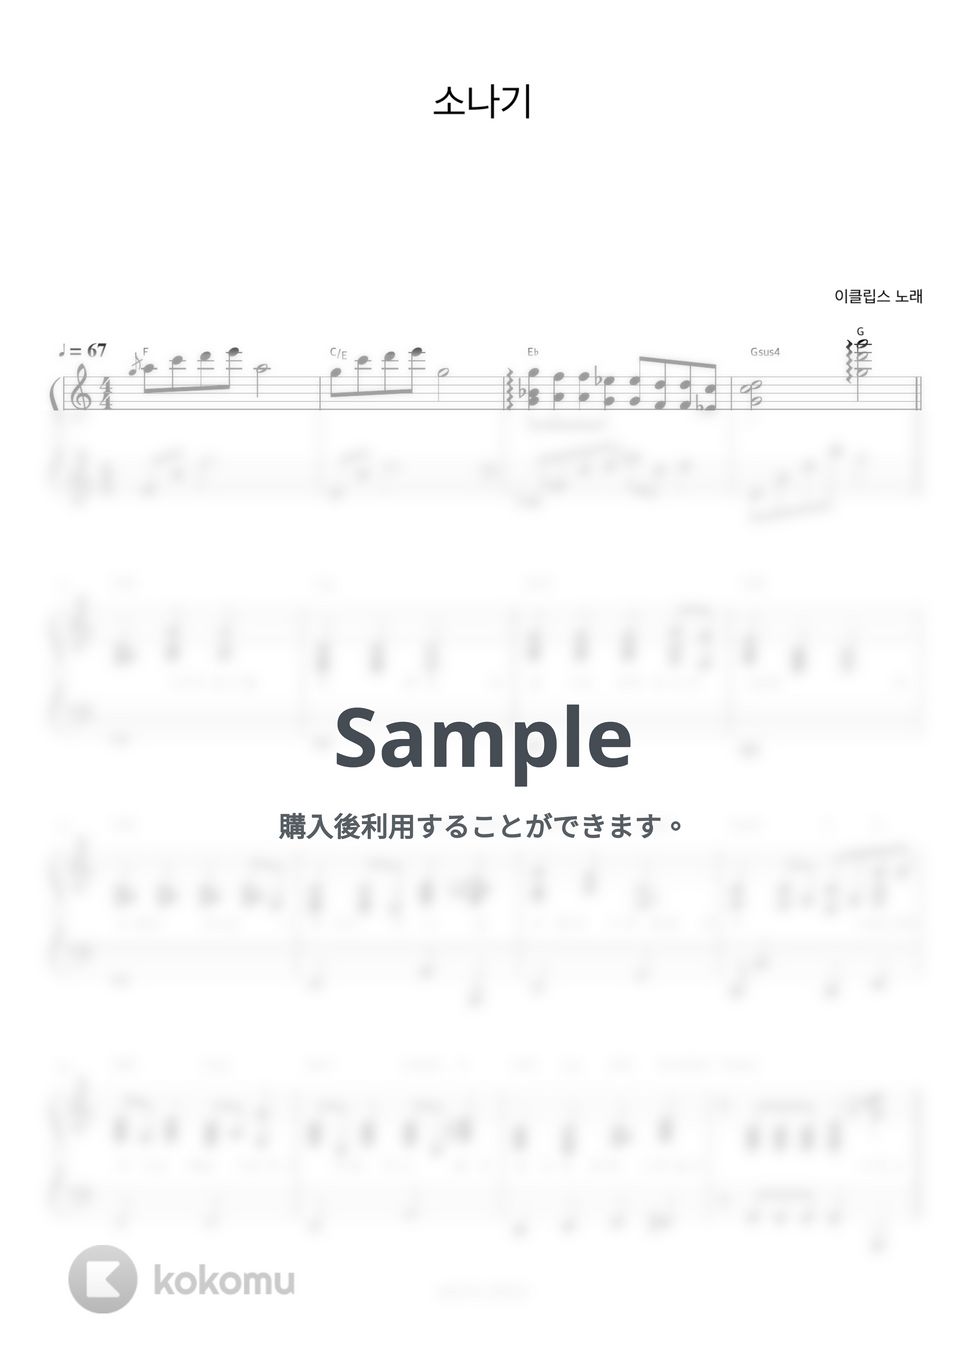 ECLIPSE - Sudden Shower (ピアノ伴奏楽譜) by 피아노정류장